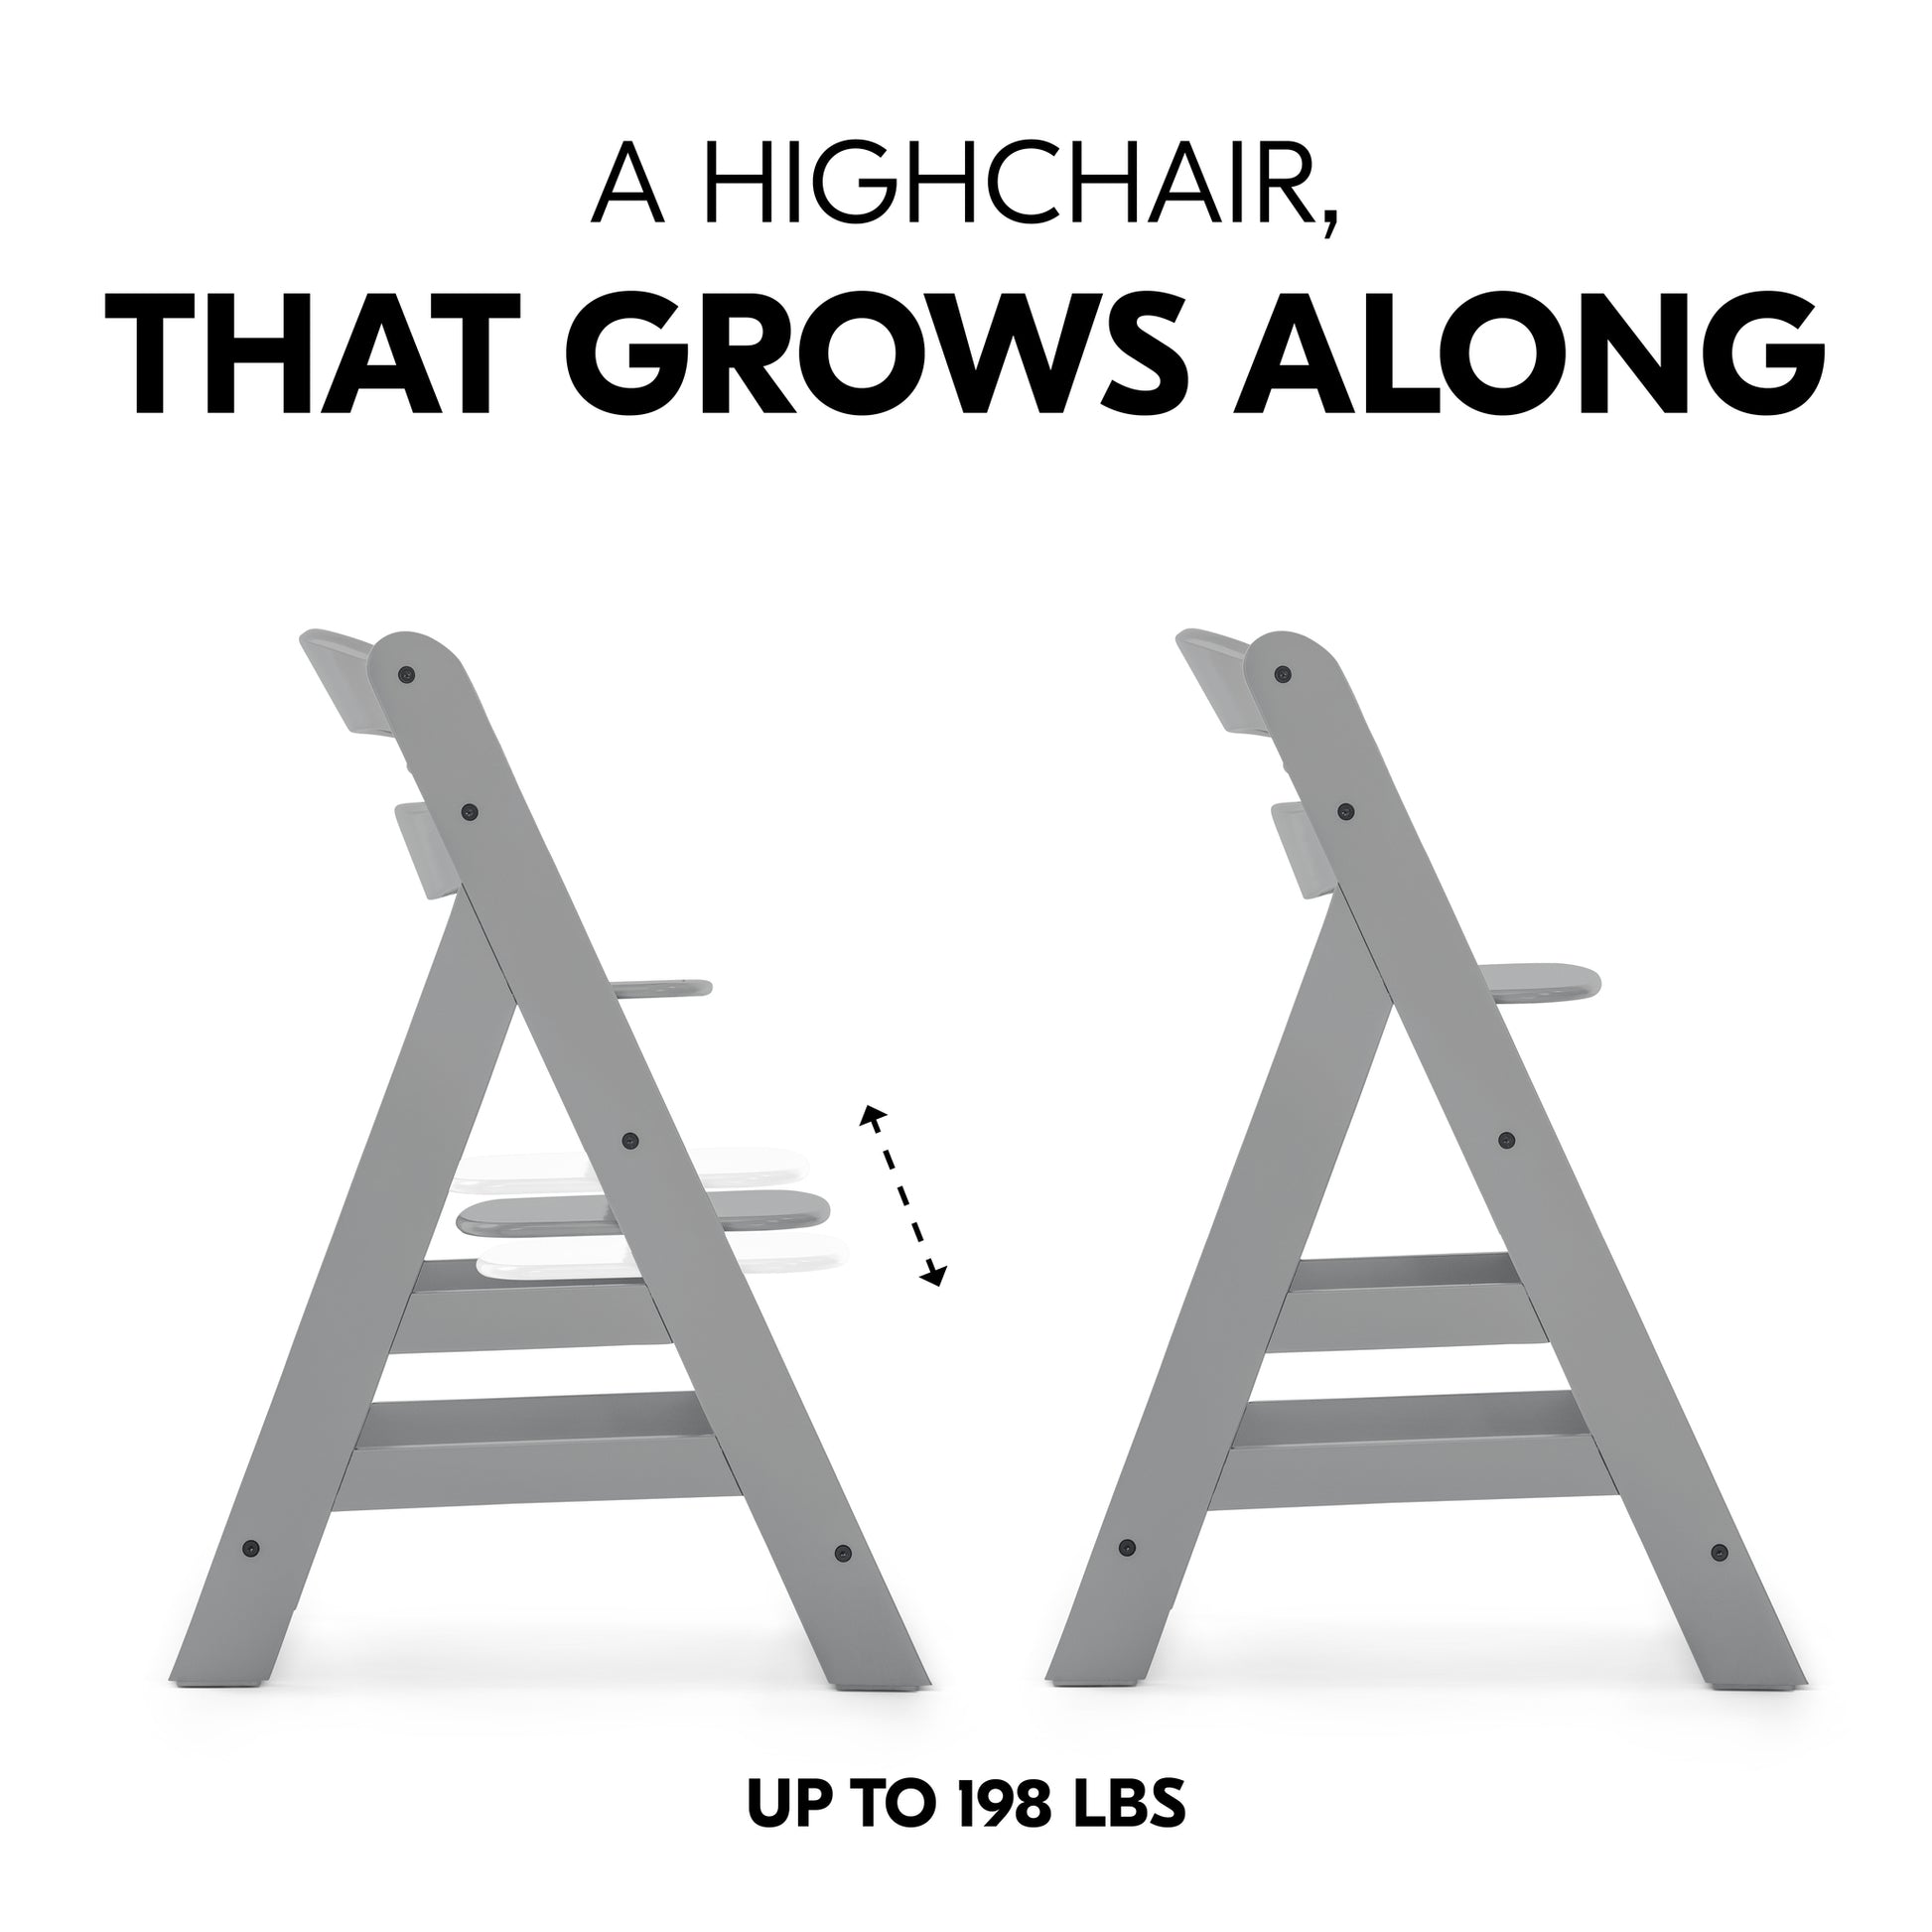 hauck Alpha+ Grow Along Adjustable Wooden Highchair Seat, Beechwood, Walnut  